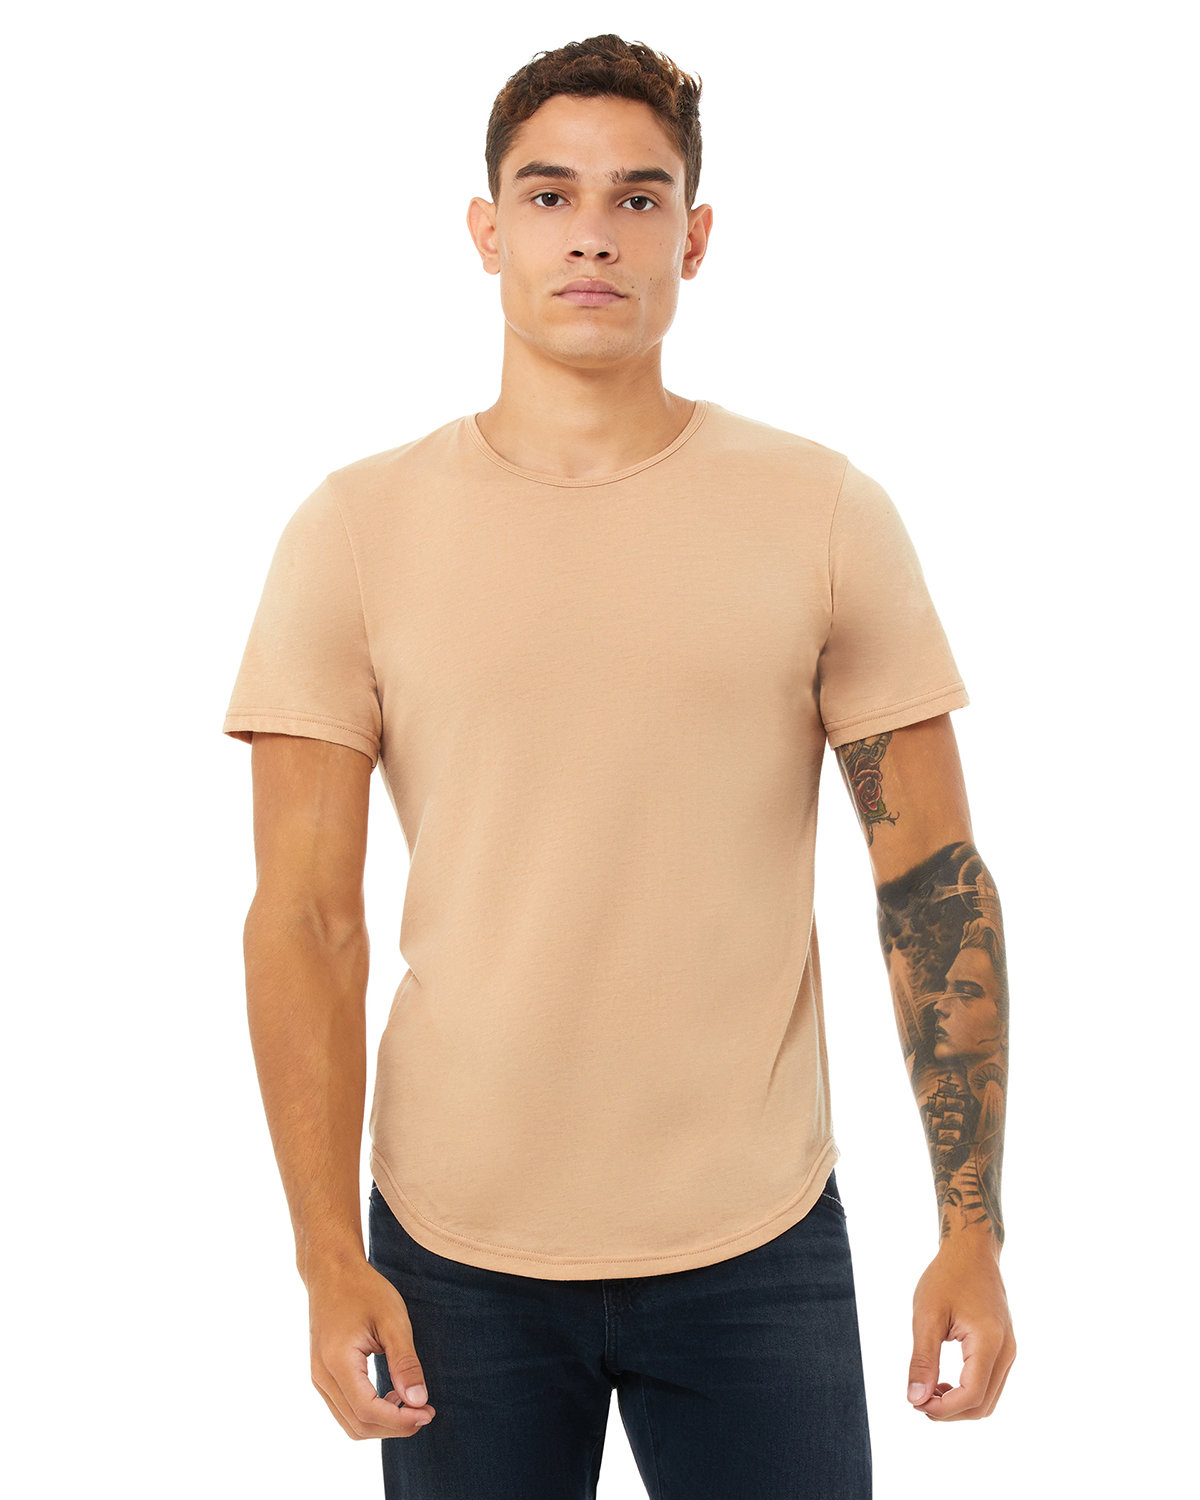 Reepham Shirt in Beige FWRD Men Clothing Shirts Short sleeved Shirts 